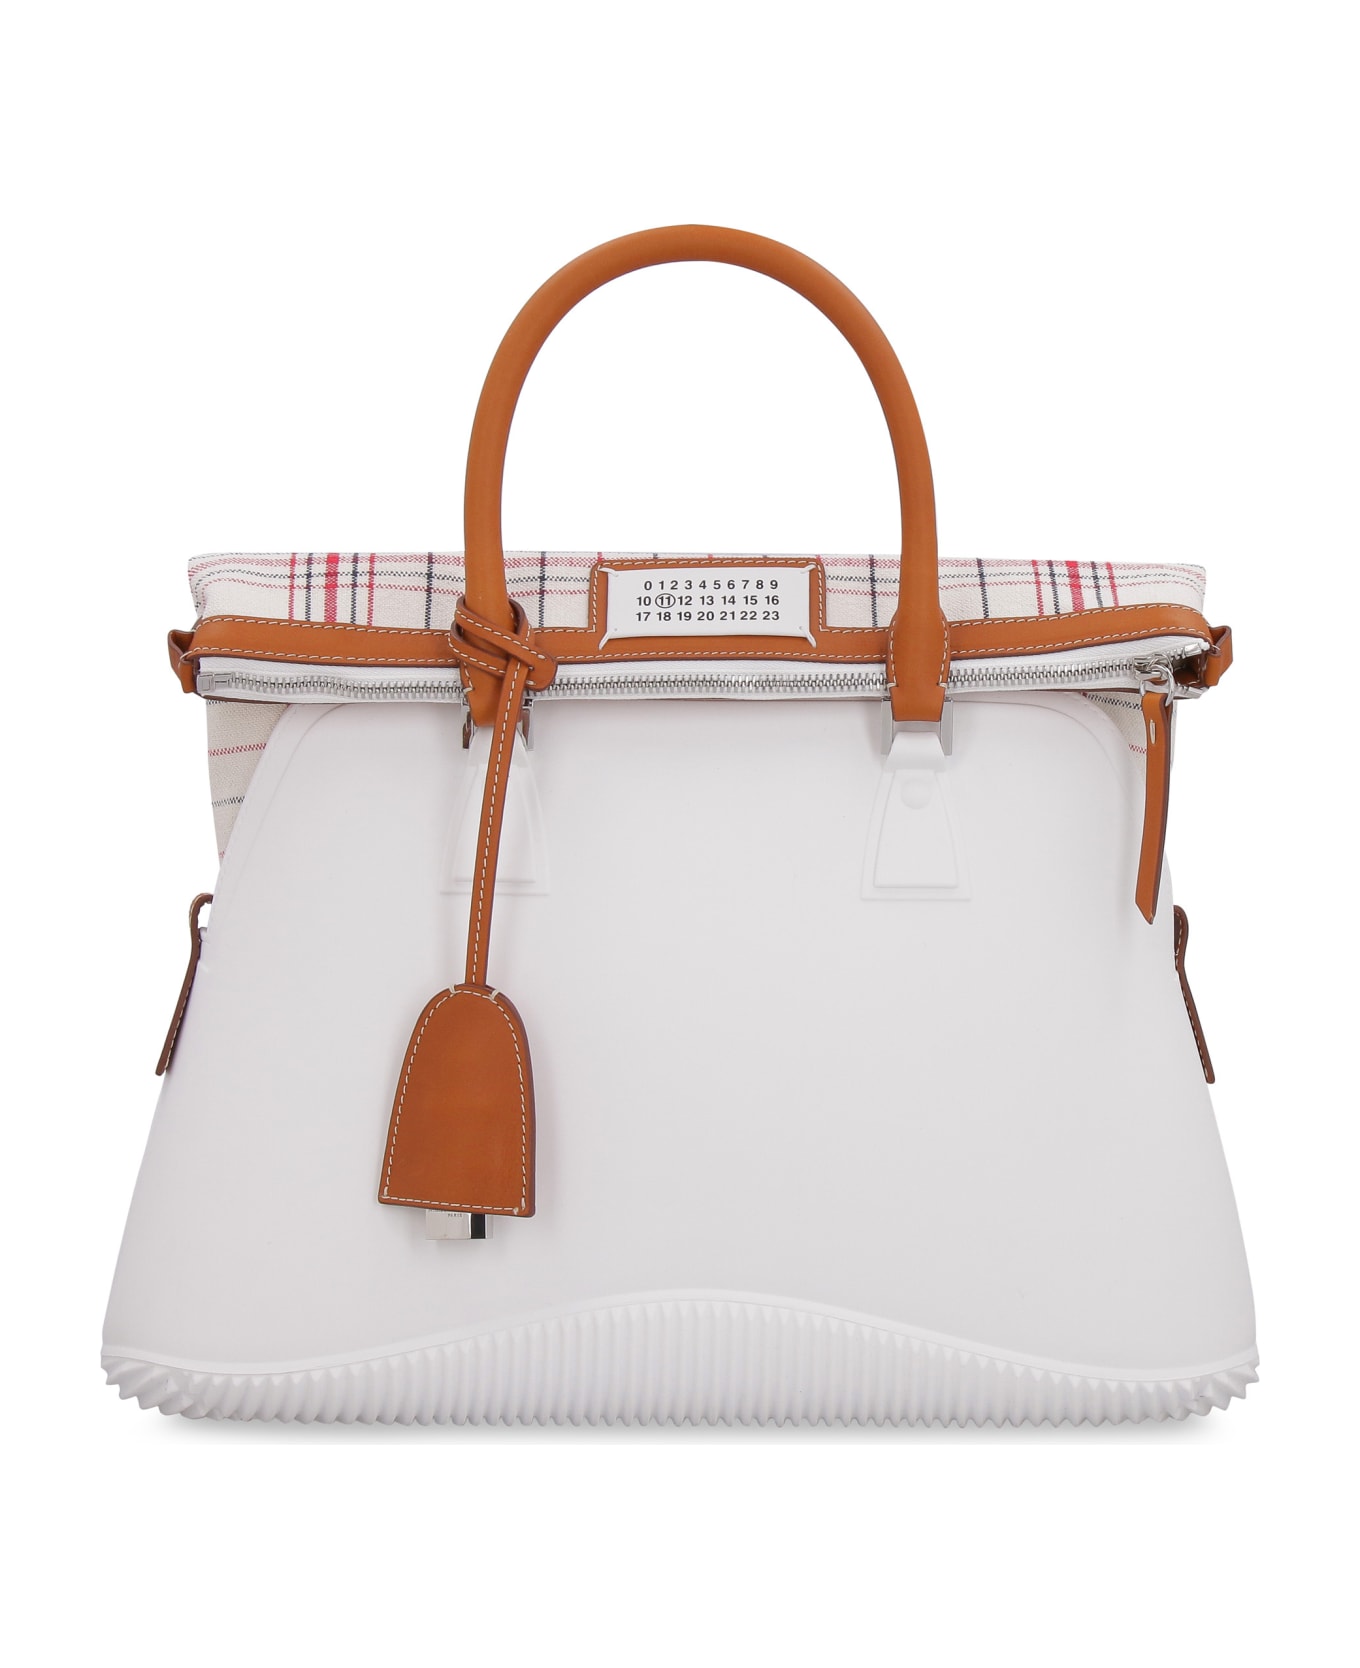 Maison Margiela 5ac Handbag - WHITE